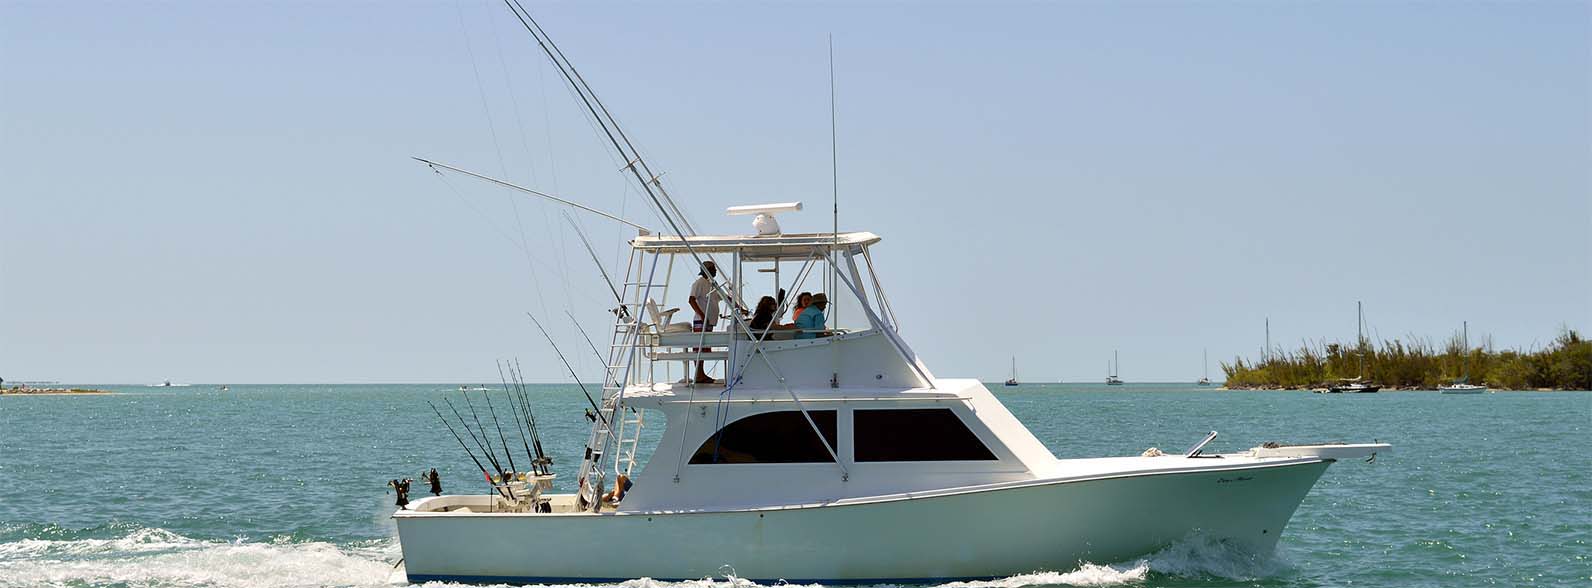 Miami-Dade Fishing Destinations & Tours